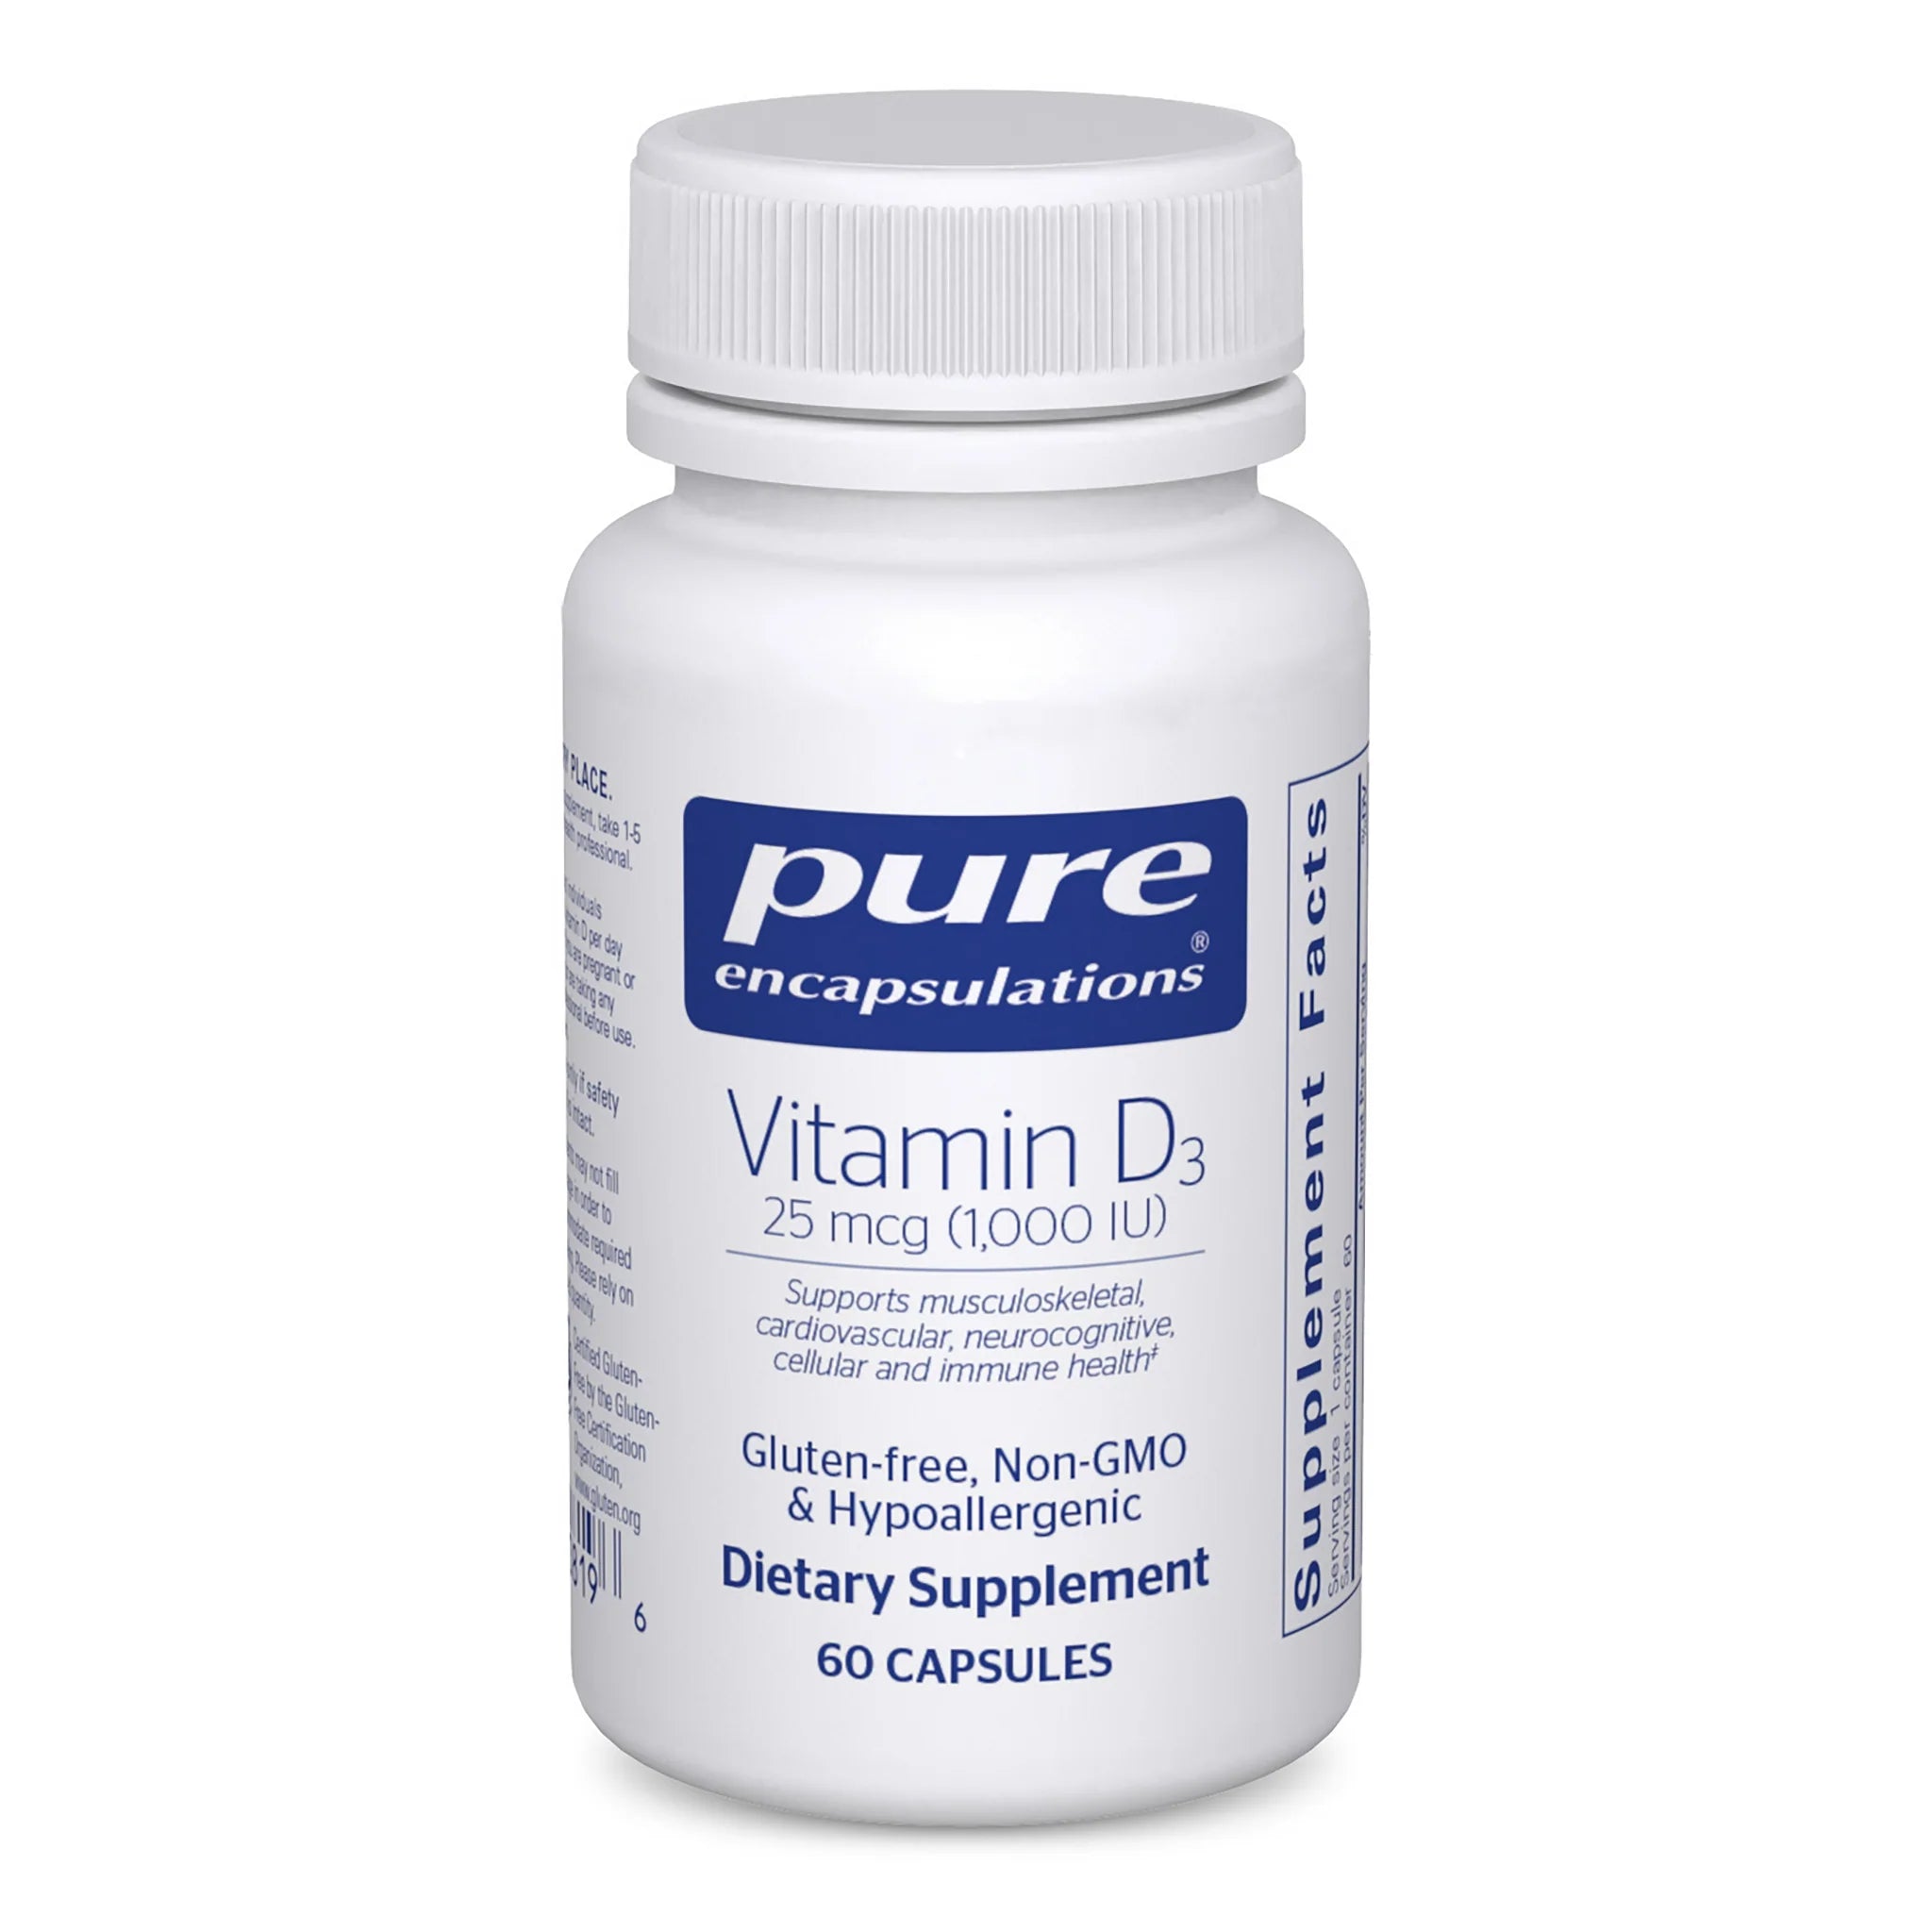 Vitamin D3 25mcg (1,000 IU)